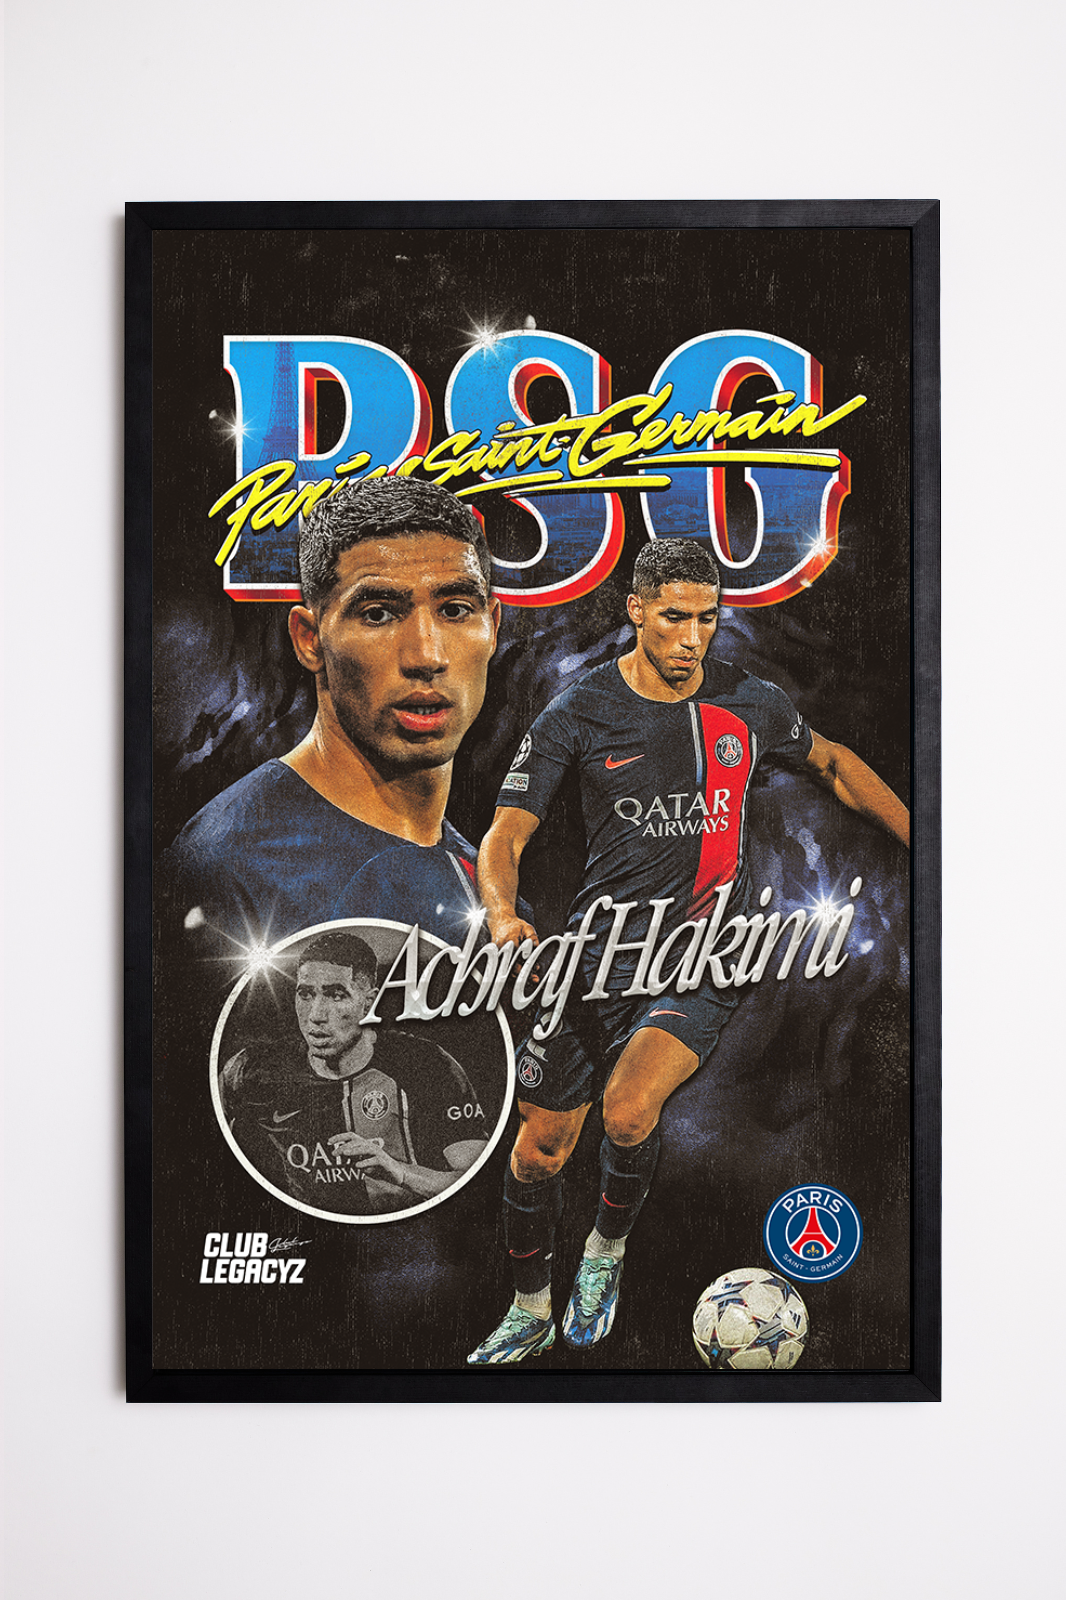 Paris Saint-Germain - Póster Bootleg Hachraf Hakimi 100 ejemplares